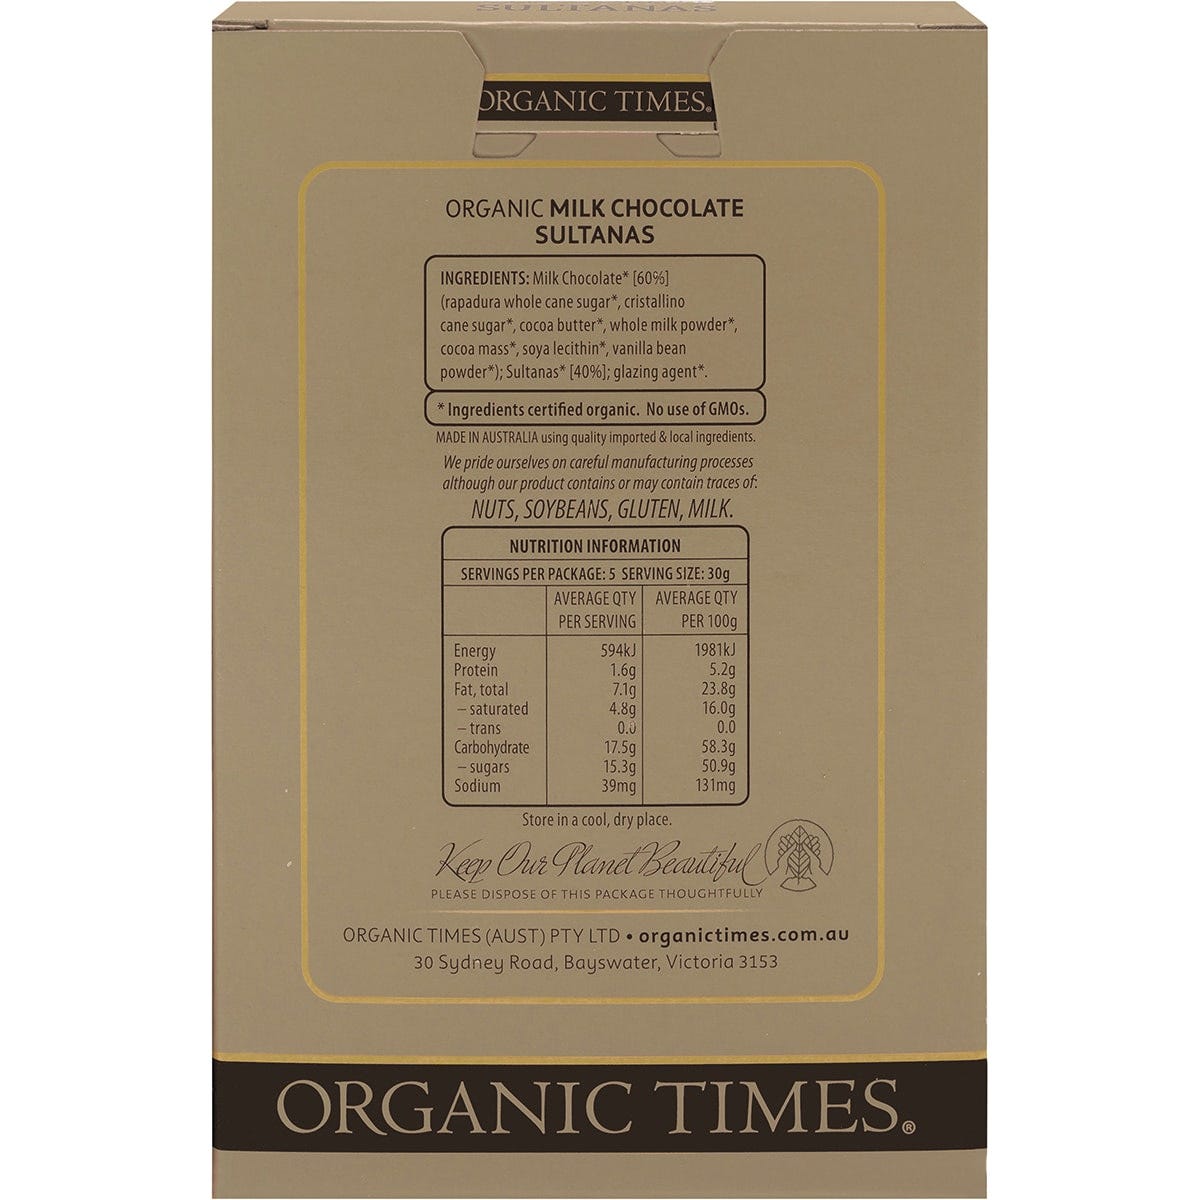 Organic Times Milk Chocolate Sultanas 150g - Dr Earth - Chocolate & Carob